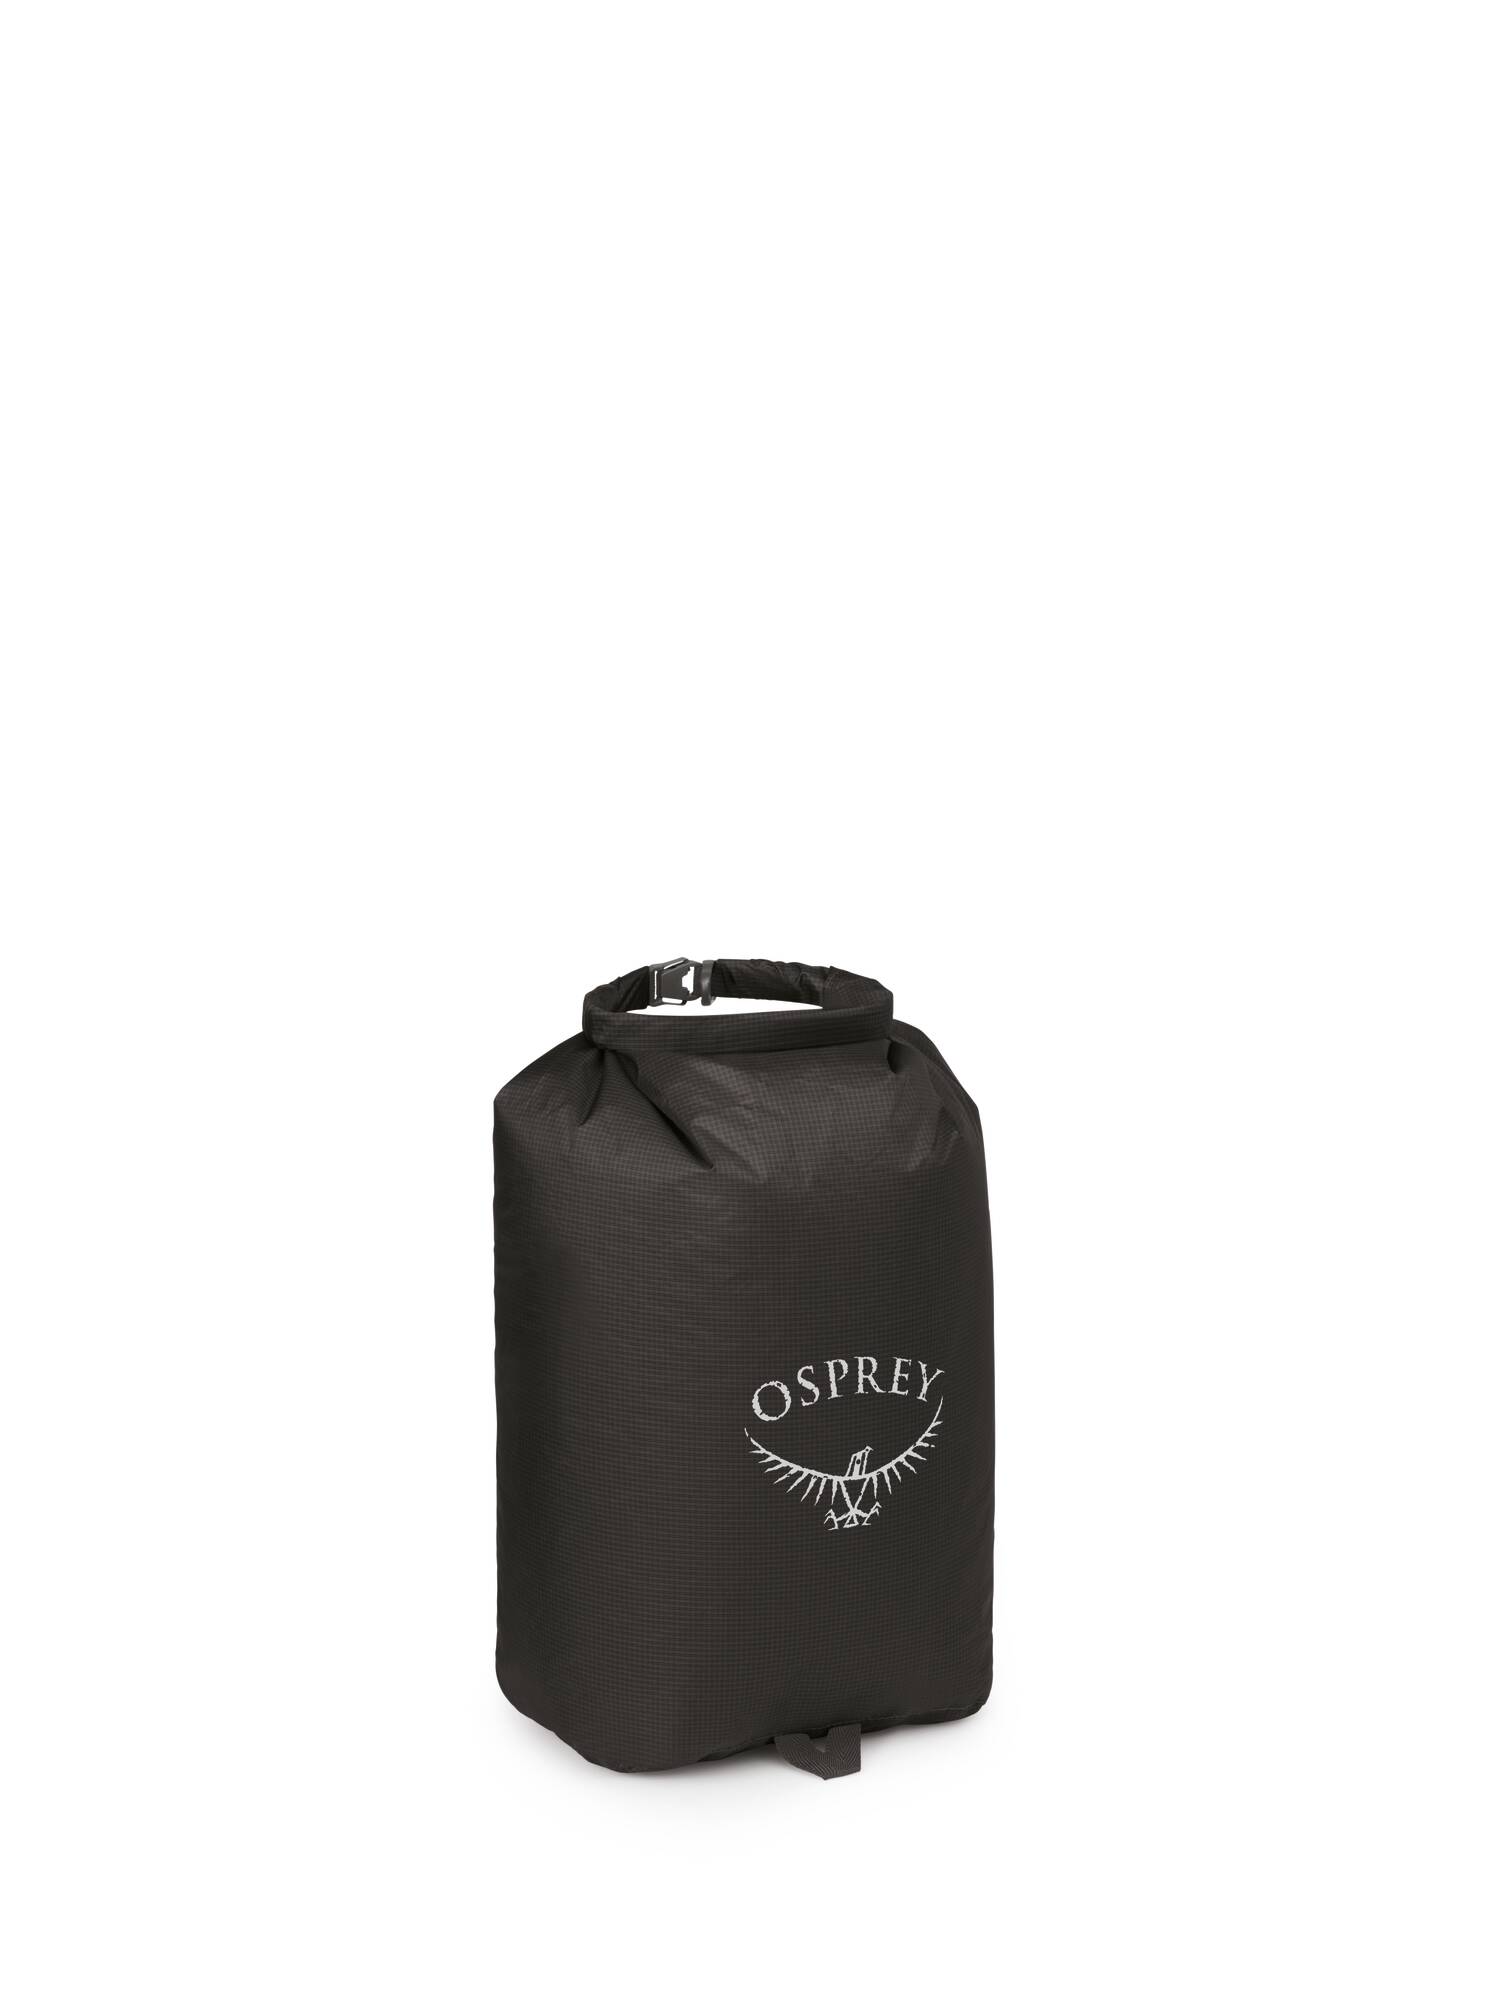 Osprey Ultralight Drysack 12L